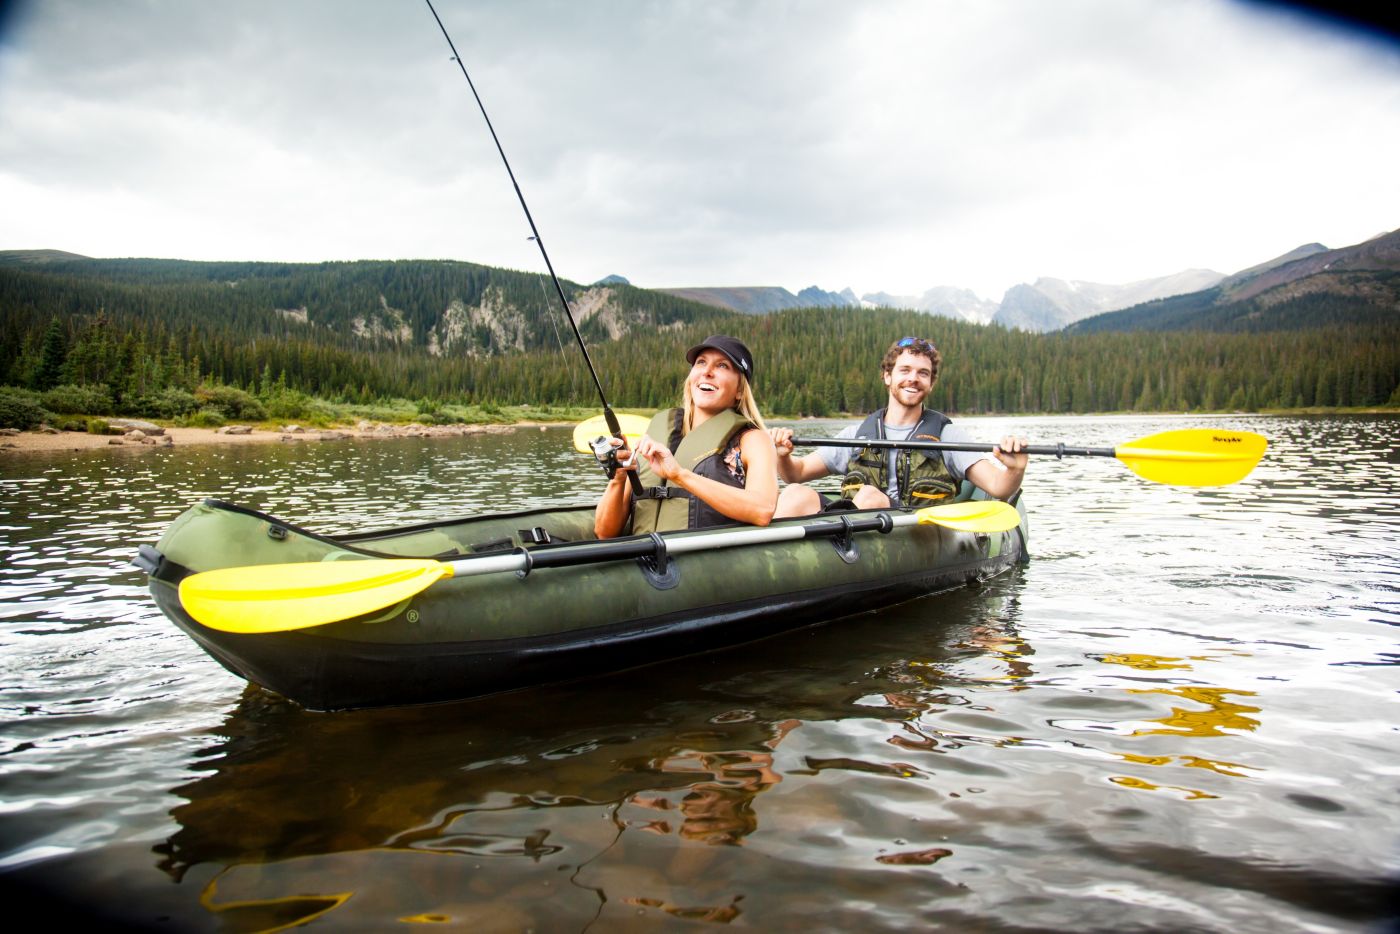  Sevylor Colorado 2-Person Inflatable Fishing Kayak